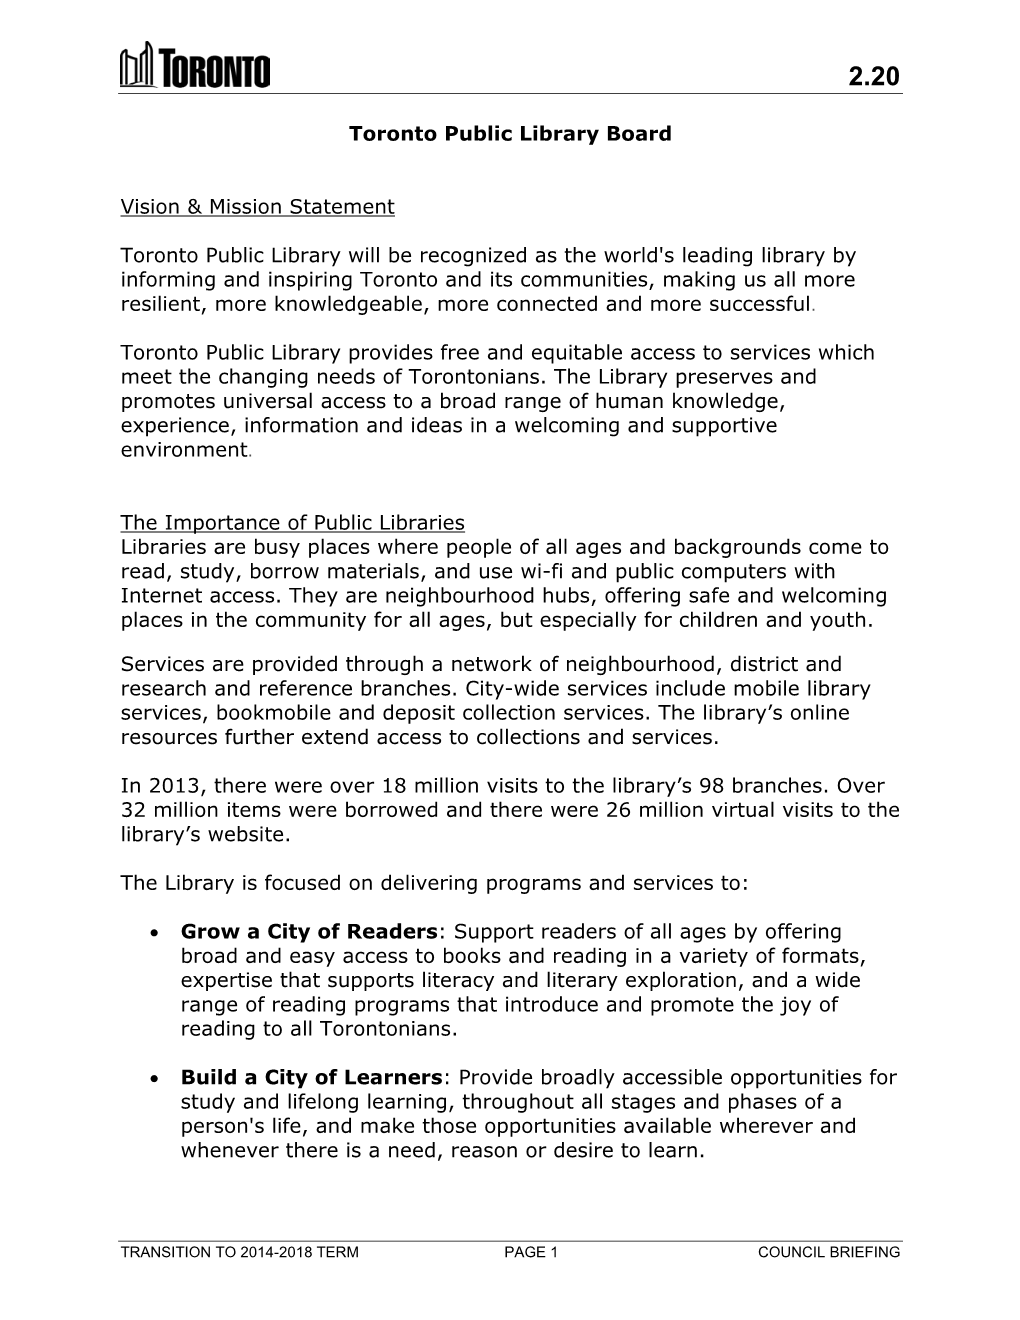 Toronto Public Library, 2014-18 Council Briefing Note